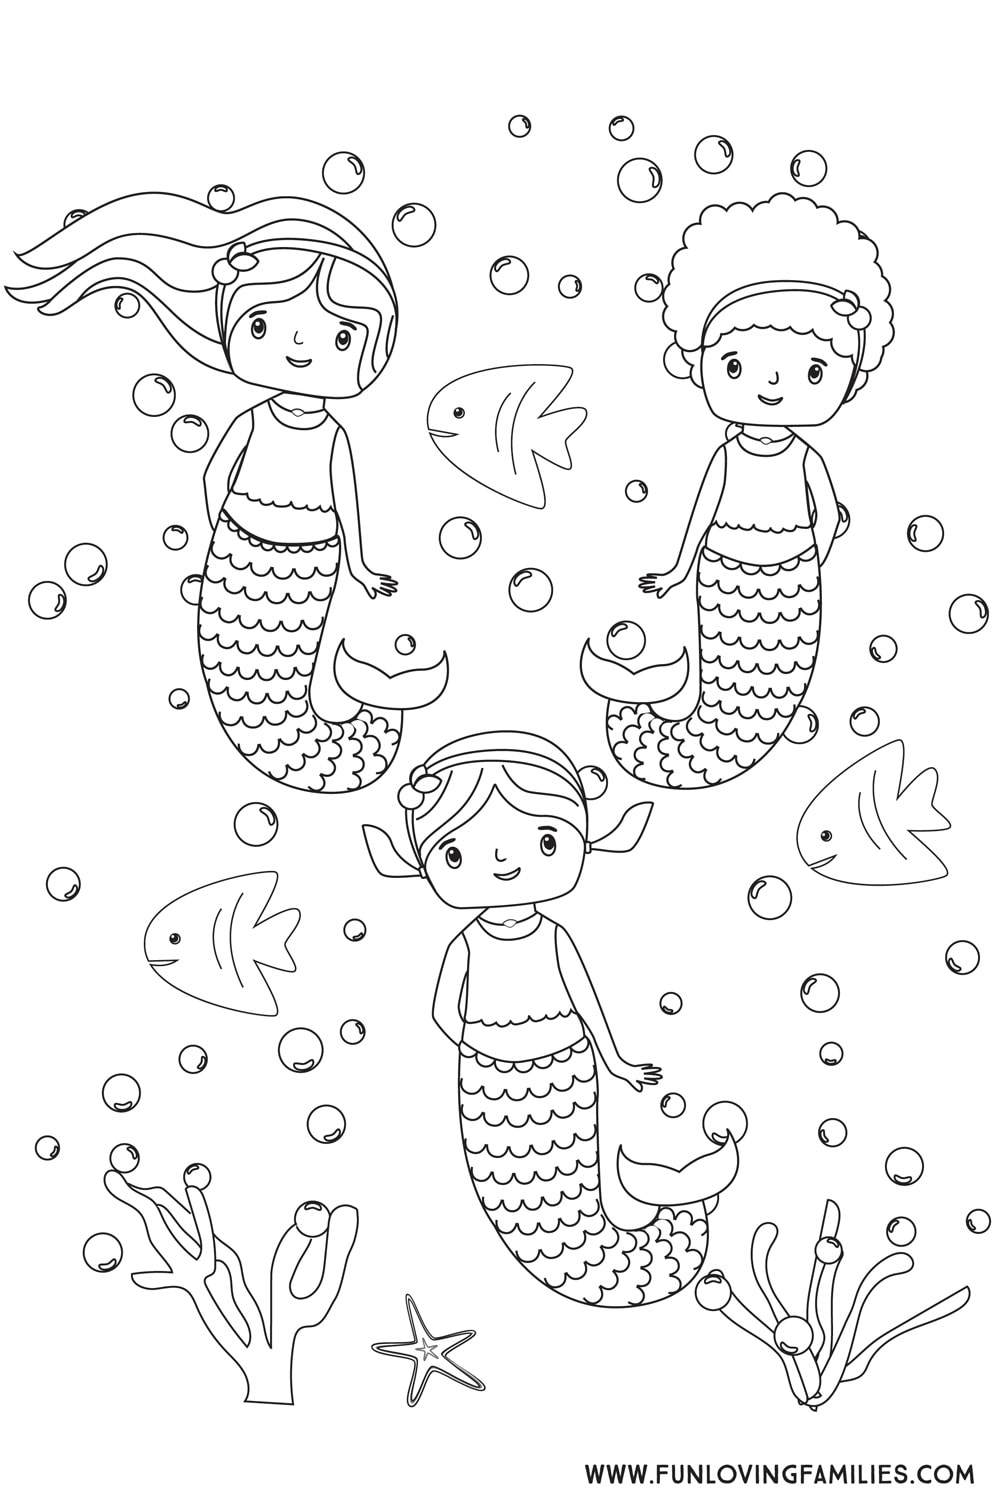 6-cute-mermaid-coloring-pages-for-kids-free-printables-fun-loving